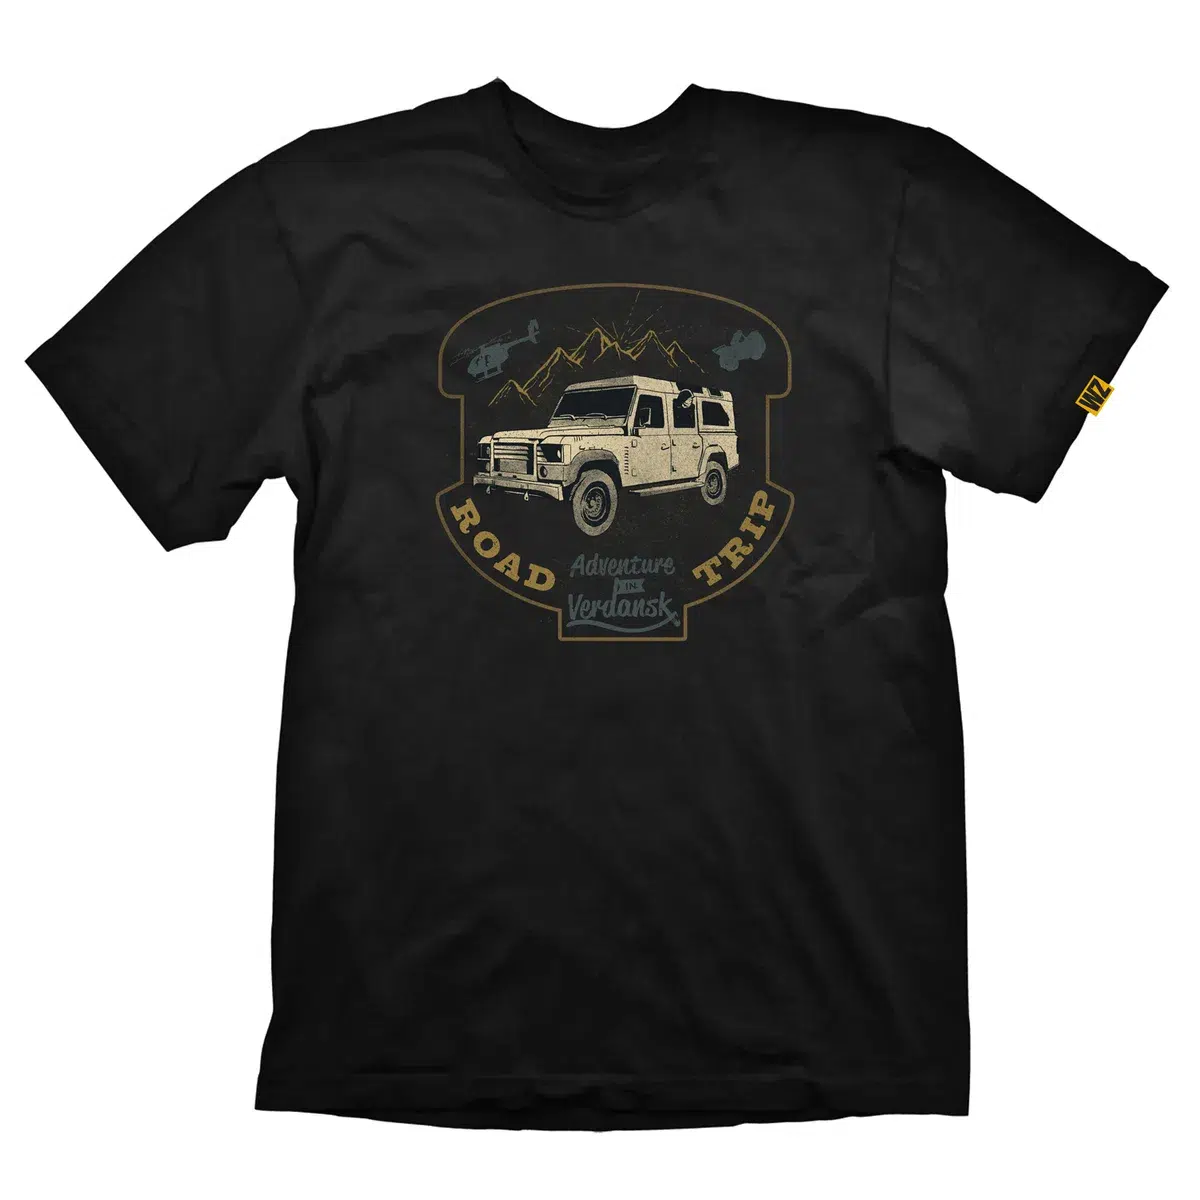 Call of Duty Warzone T-Shirt "Road Trip" Black